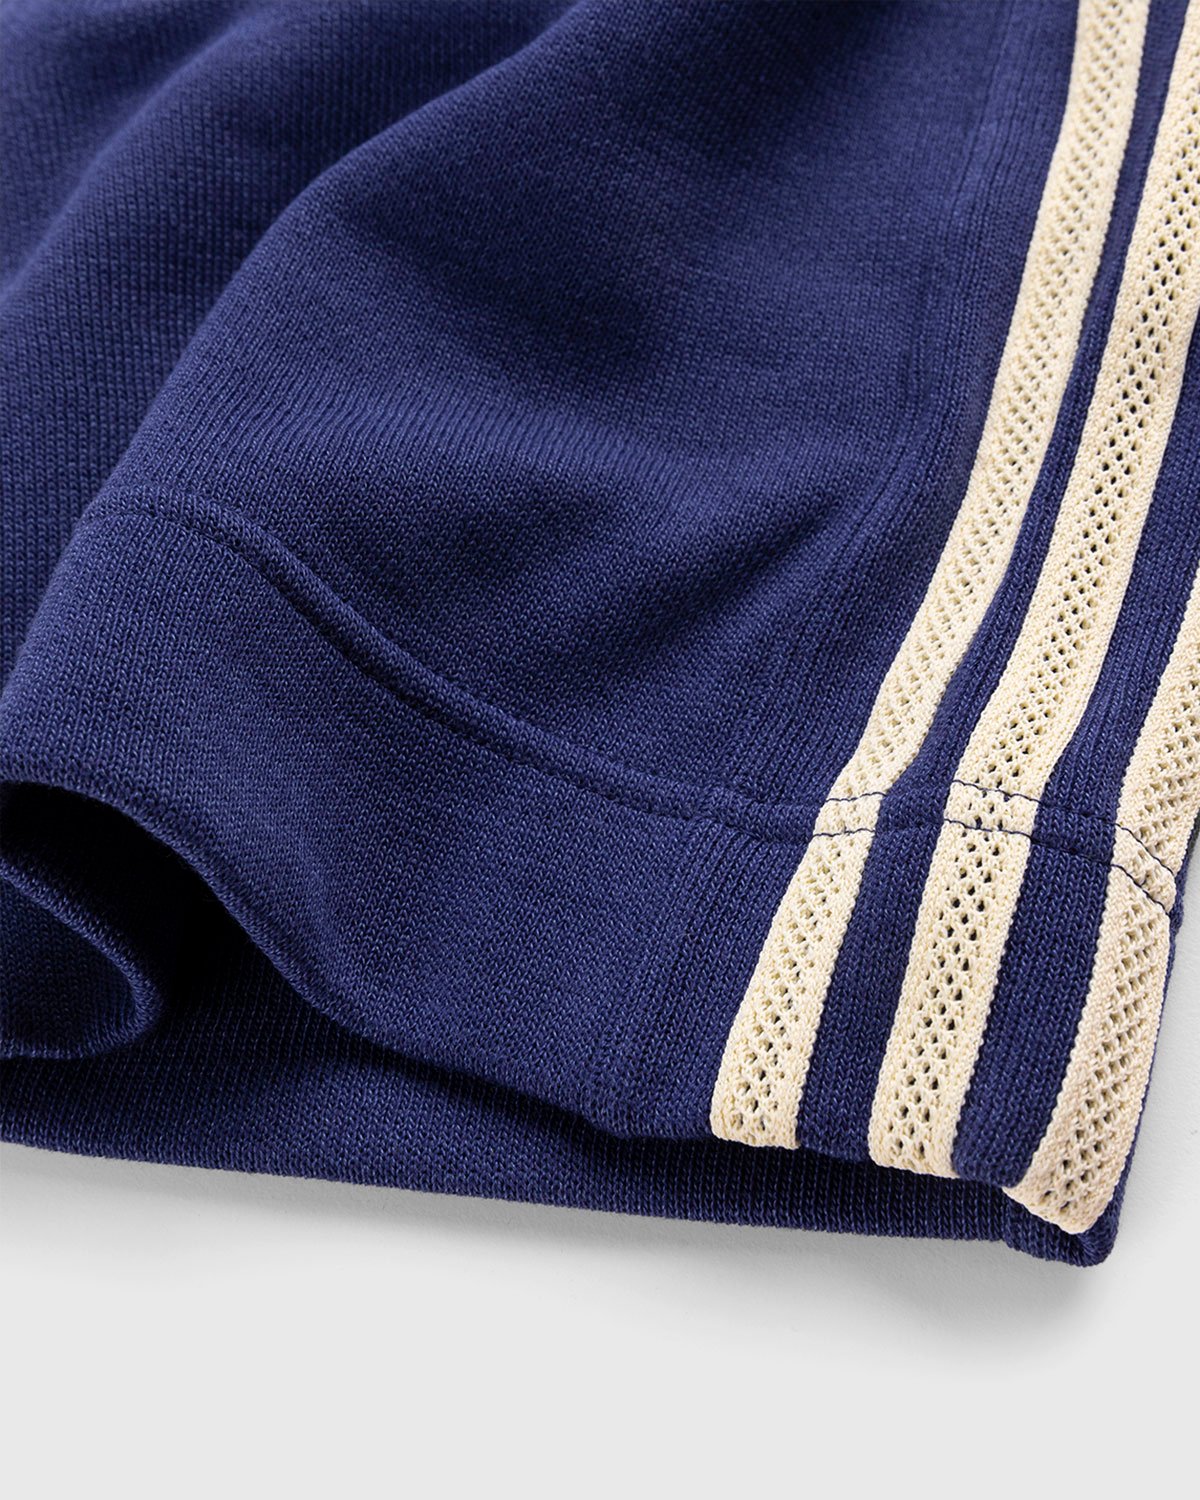 Adidas x Wales Bonner - 80s Track Pants Night Sky - Clothing - Blue - Image 3